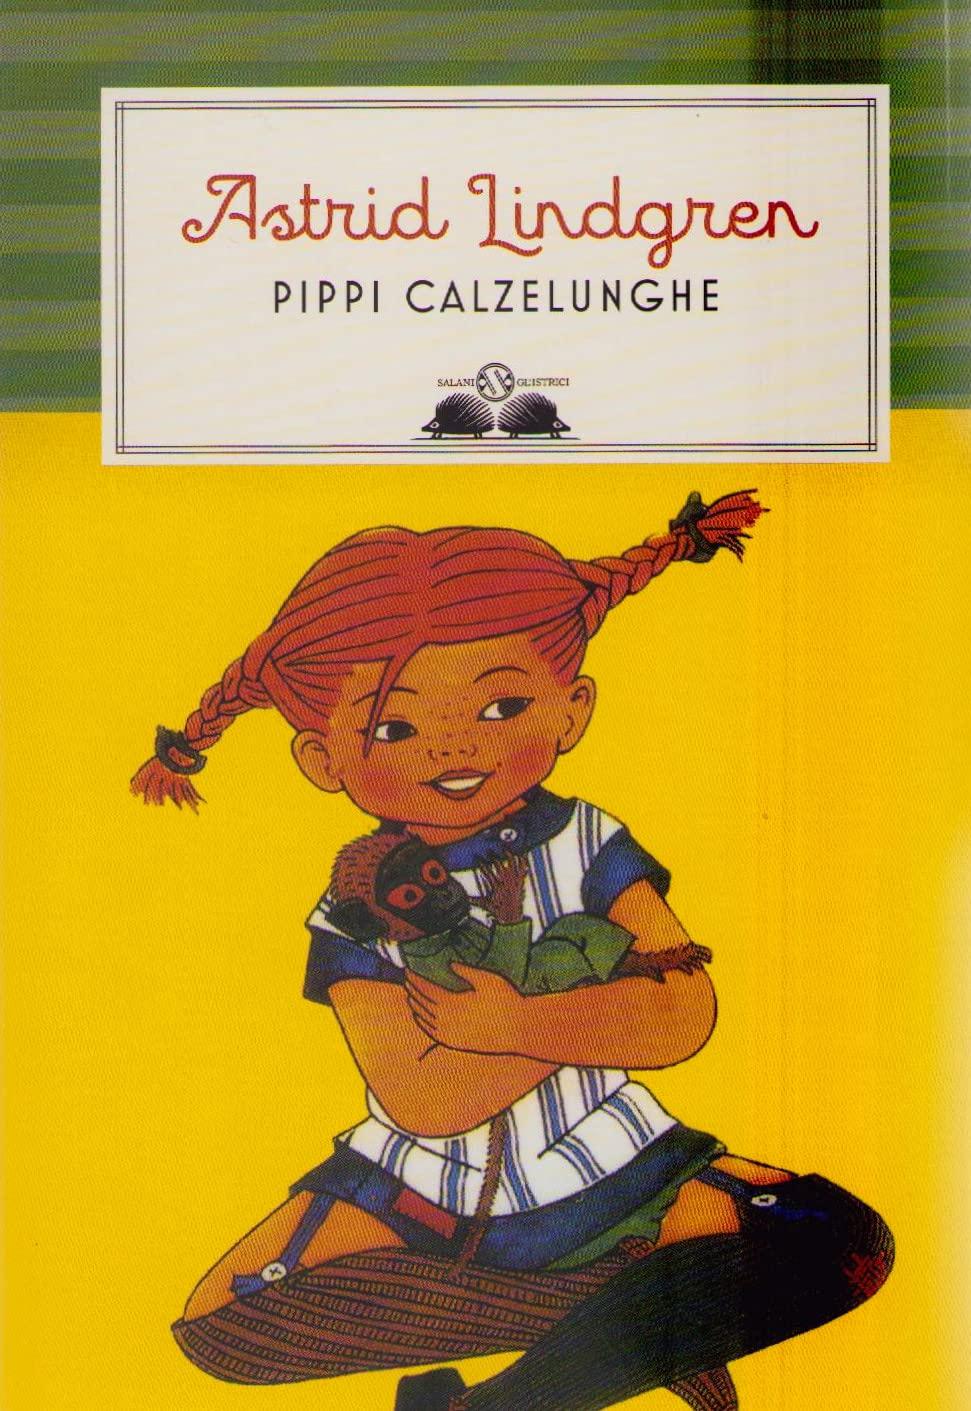 Libro "Pippi Calzelunghe" di Astrid Lindgren